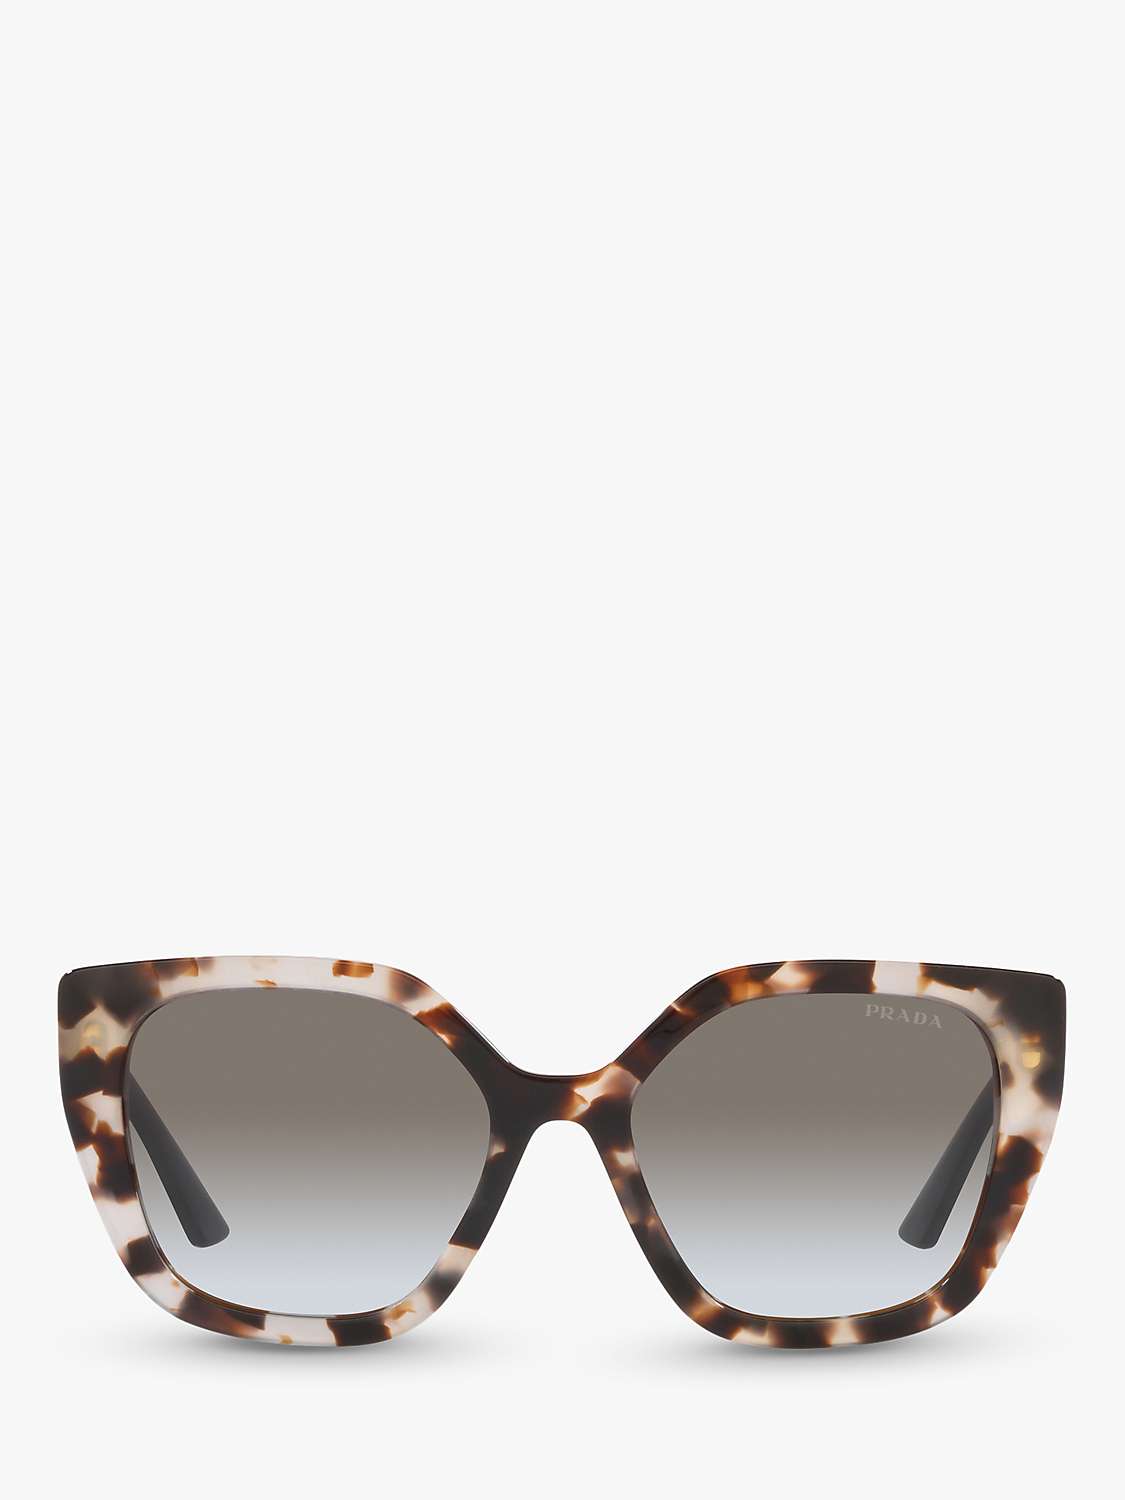 Buy Prada PR24XS Women's Cat's Eye Sunglasses, White Tortoise Online at johnlewis.com